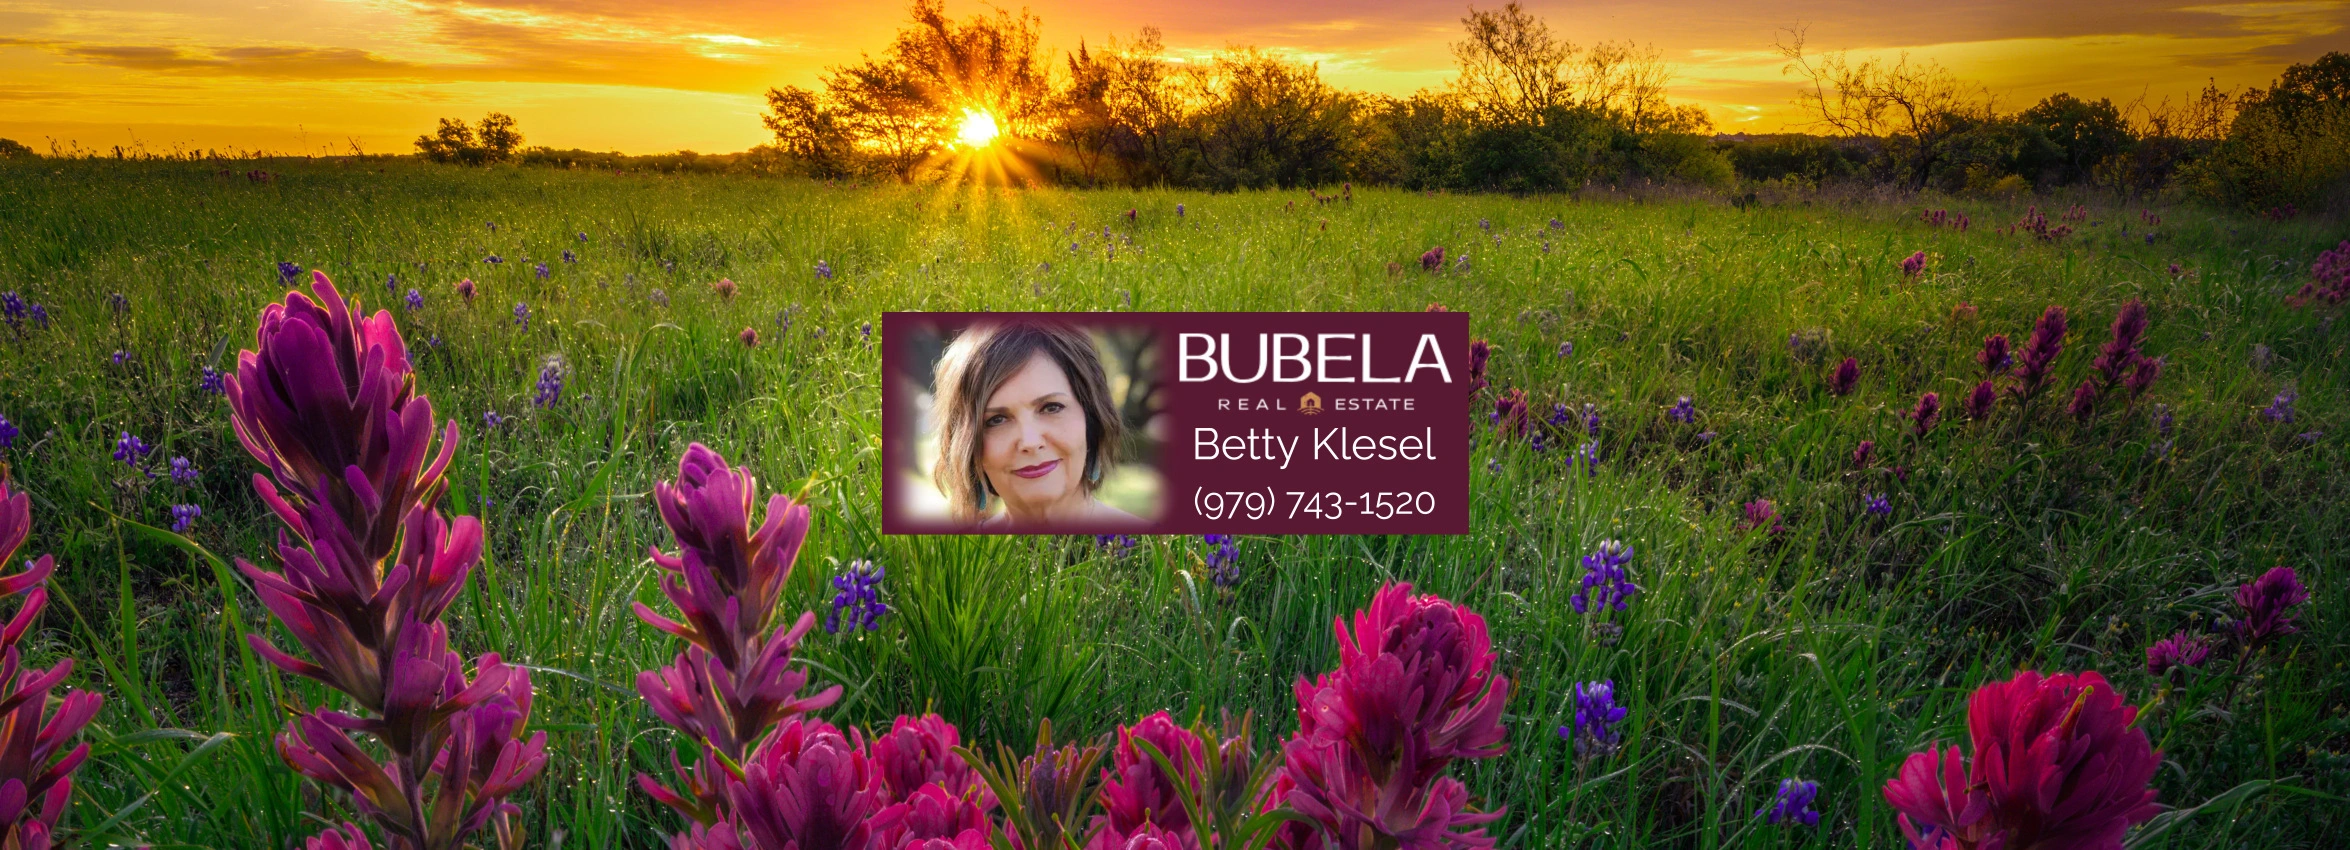 Betty-Klesel-Bubela-Real-Estate_Desktop_ET